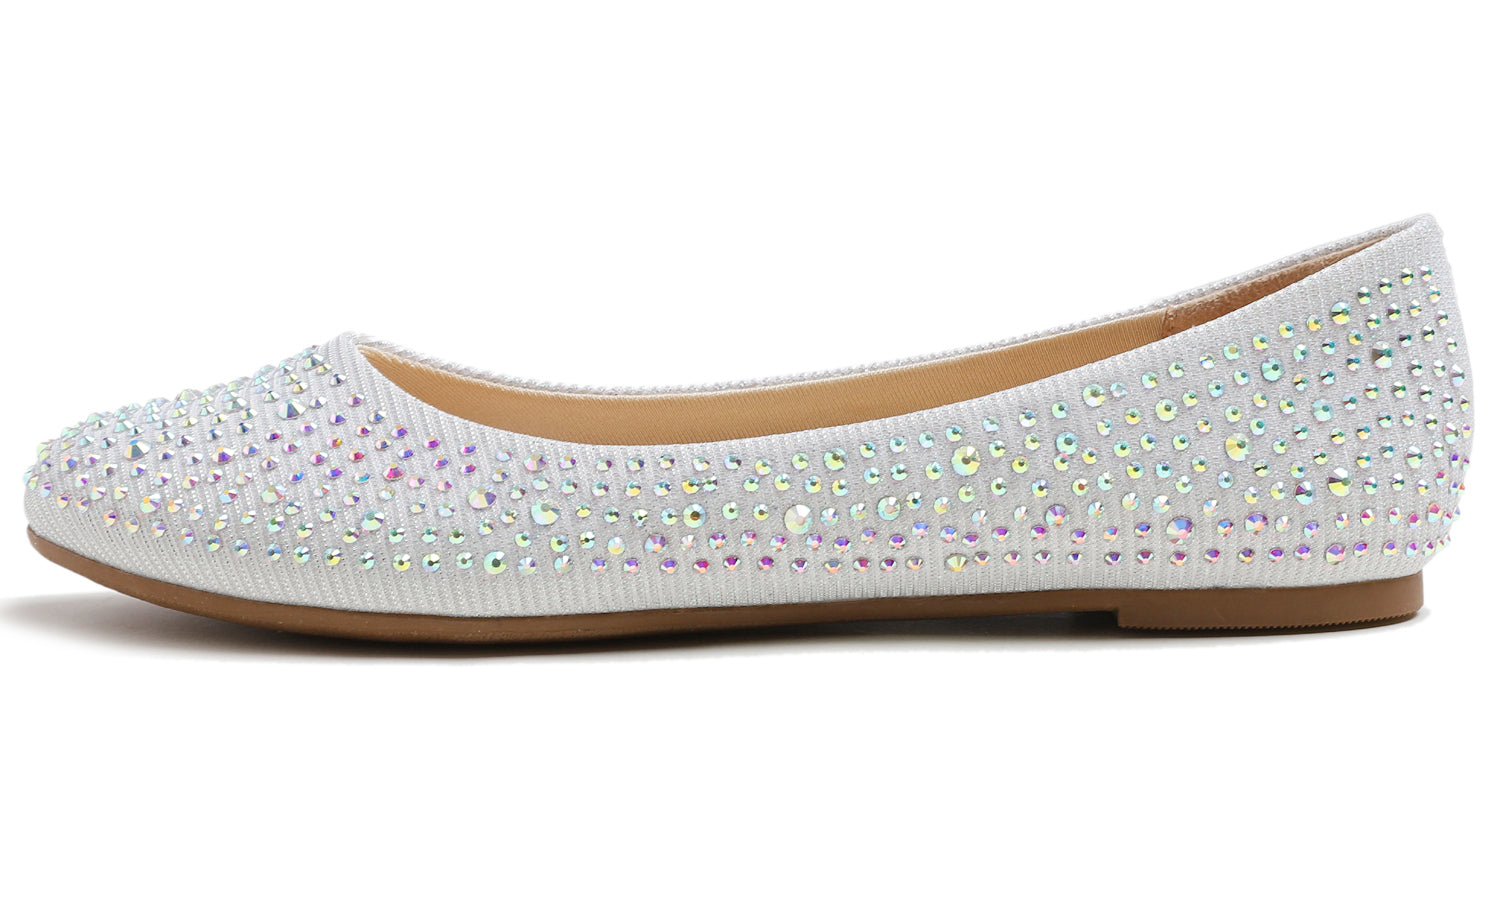 Feversole Women's Rhinestone Flat Shoes Sparkly Embellished Party Wedding Dress Ballets White Lurex